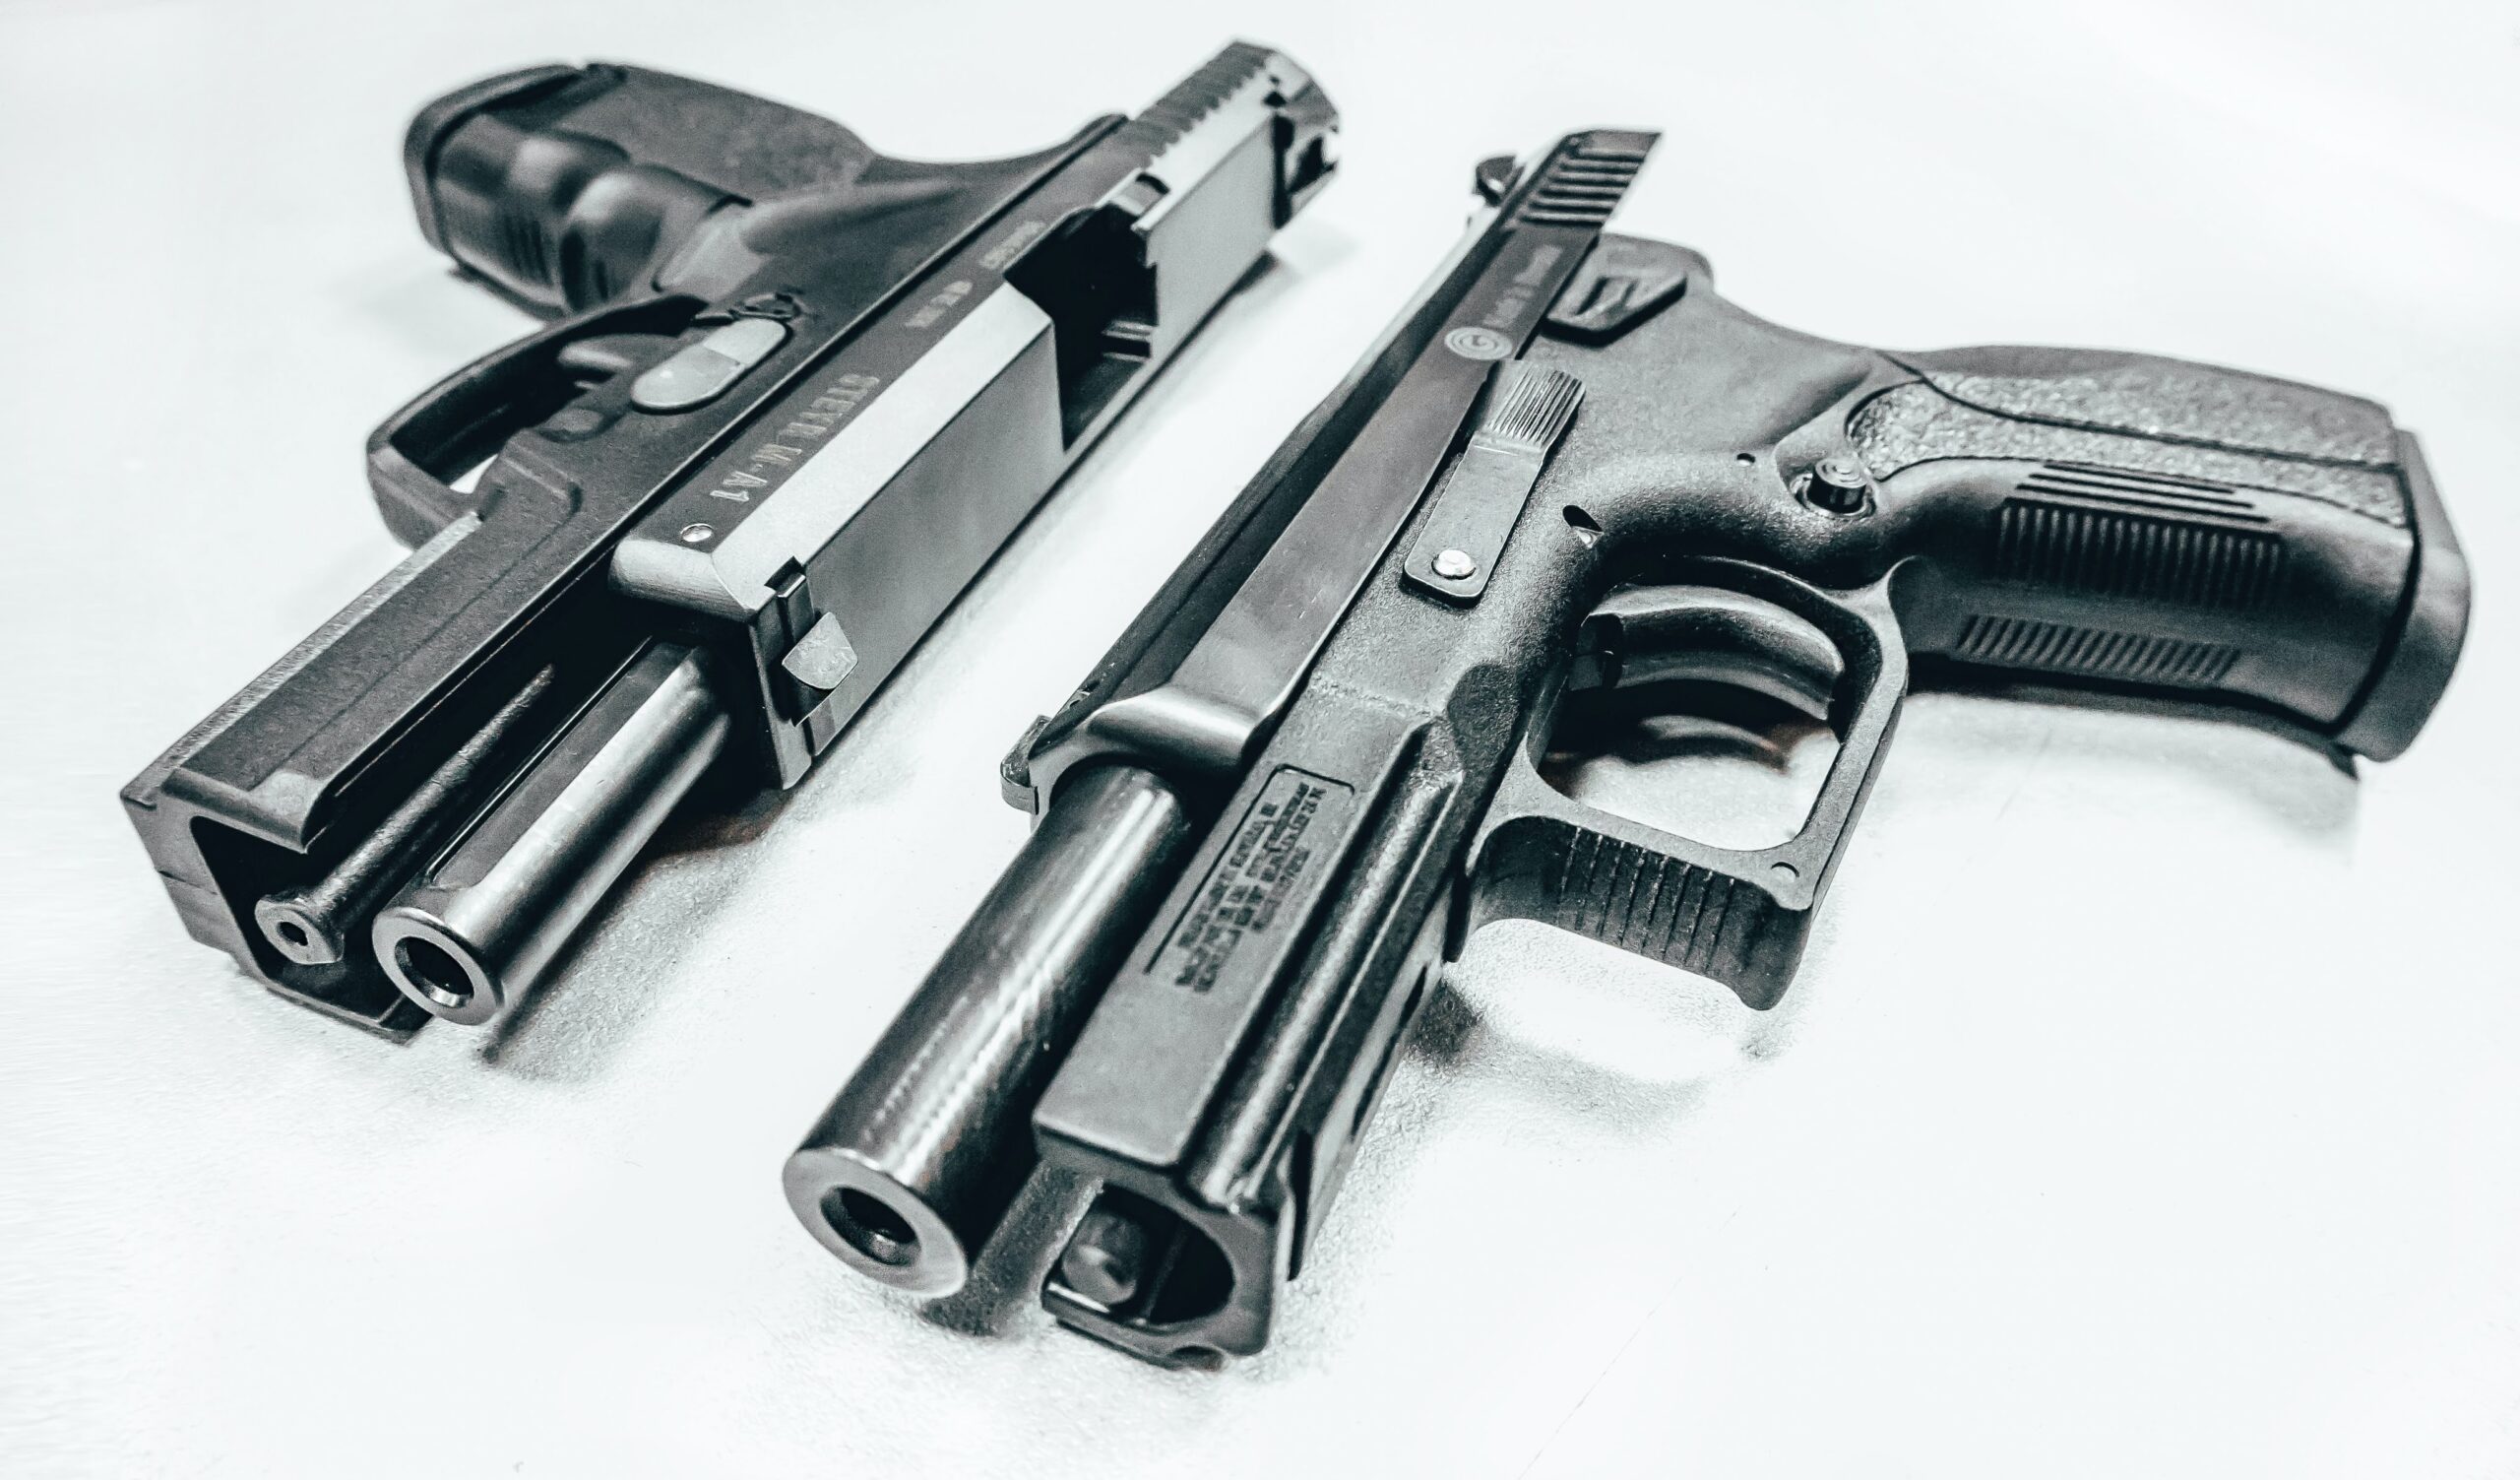 Photo of 2 silver semi-automatic firearms